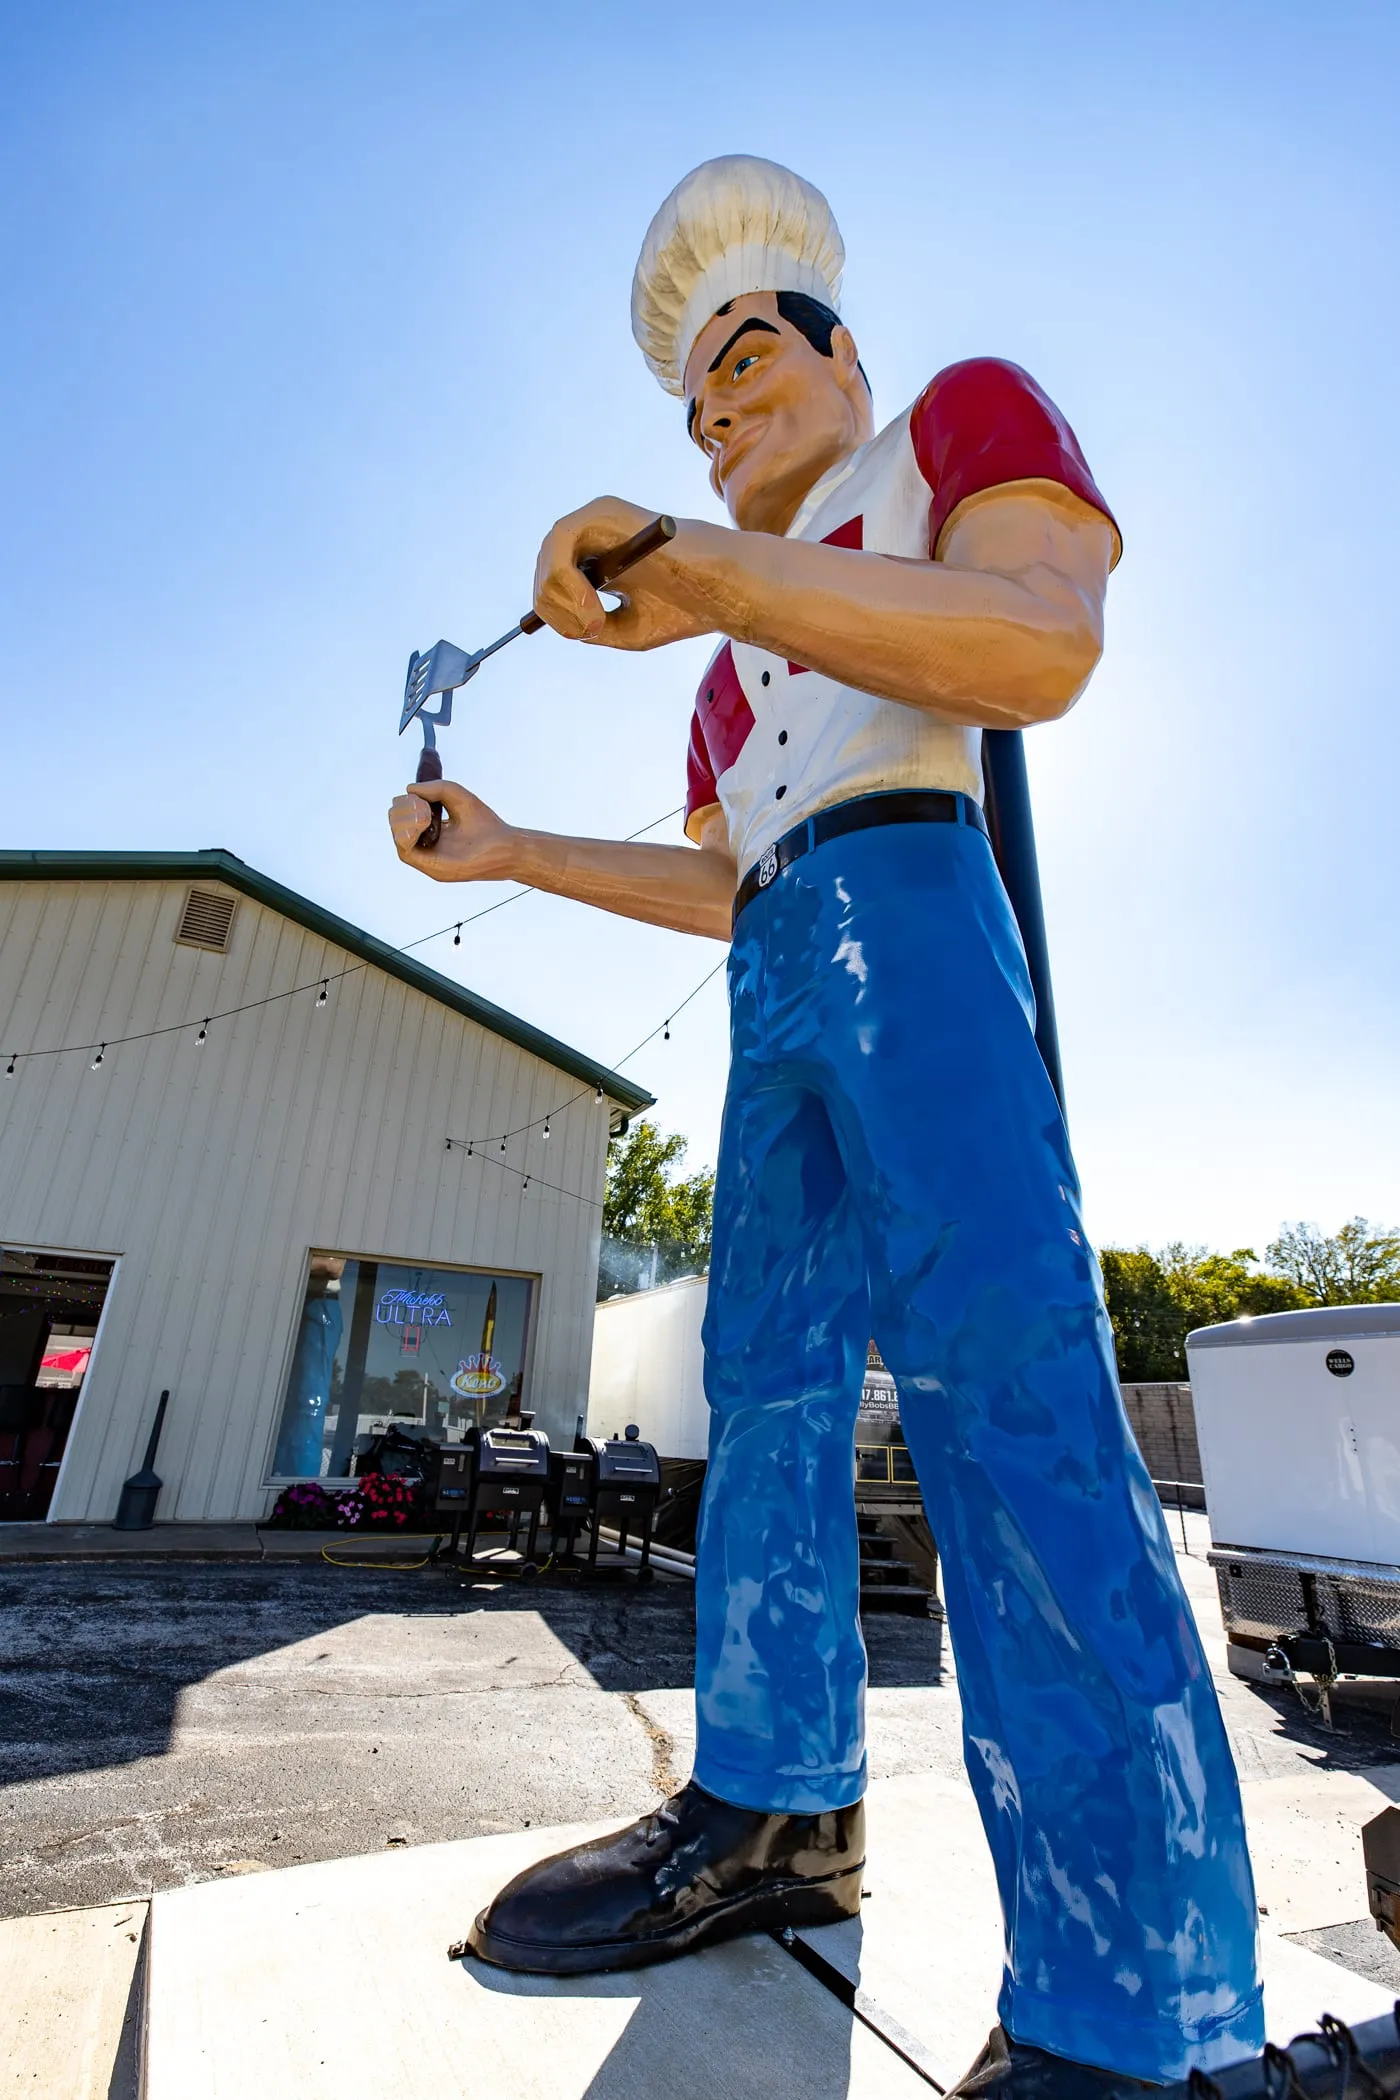 Route 66 Food Truck Park & Chef Muffler Man roadside attraction in Springfield, Missouri